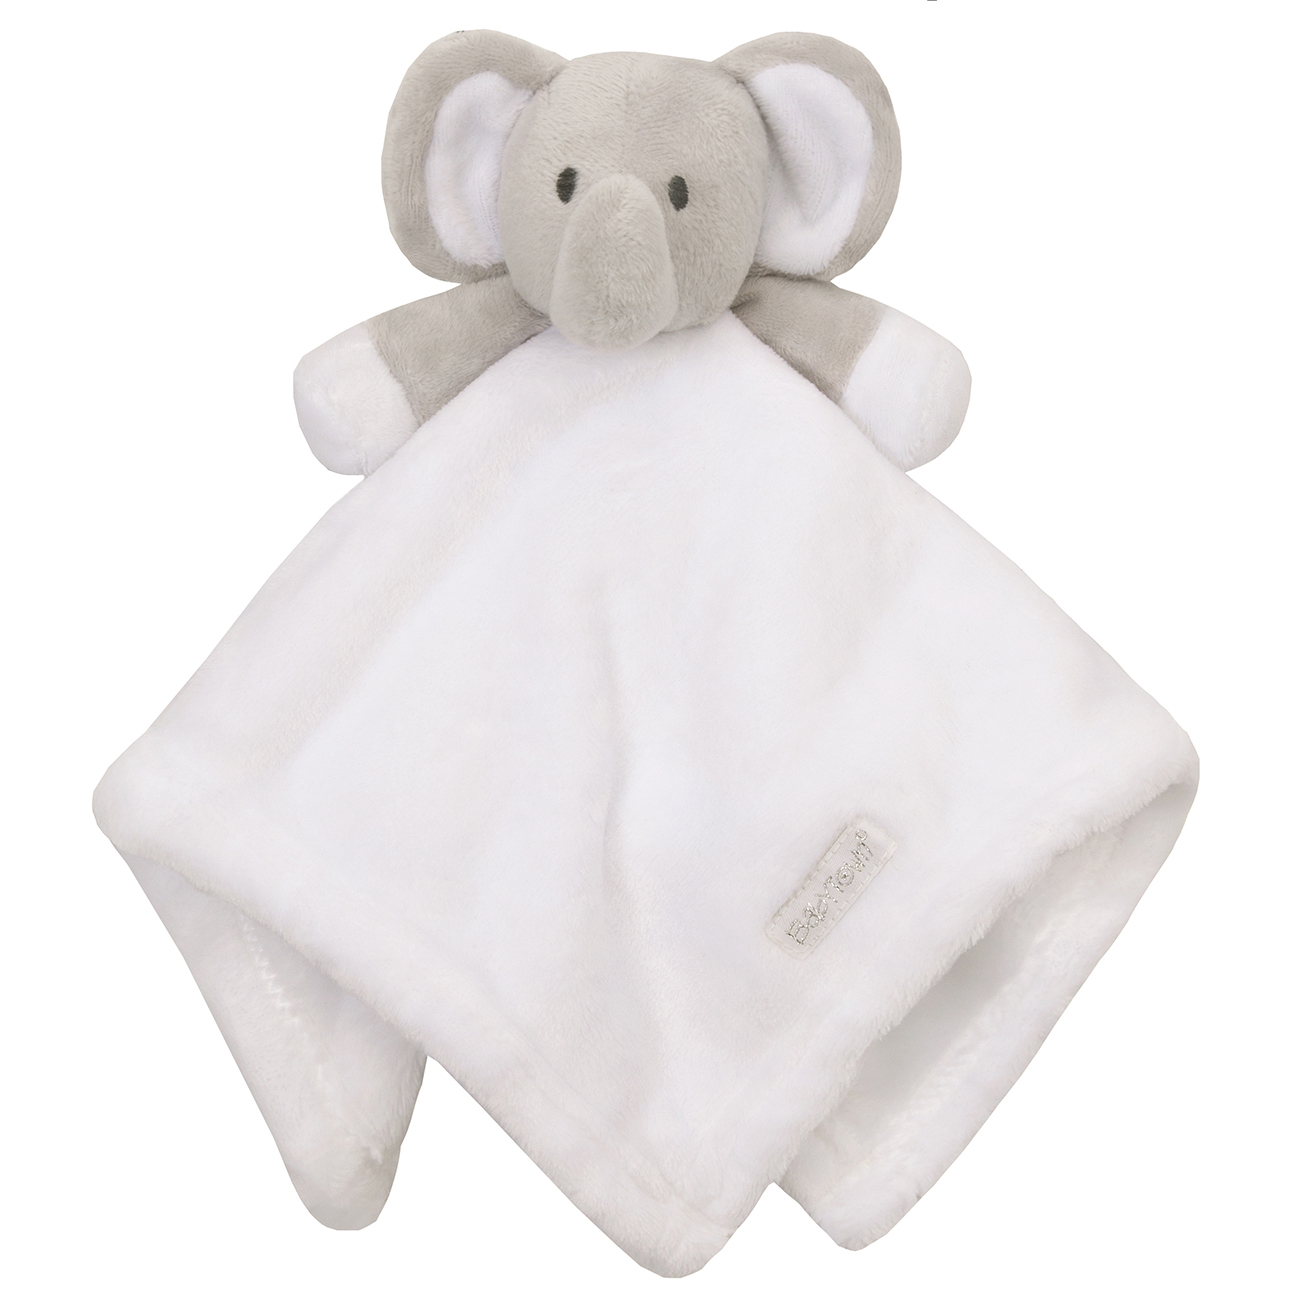 Baby Boy Fleece Blanket Cot Pram Travel babies teddy toy comfort Machine Wash 